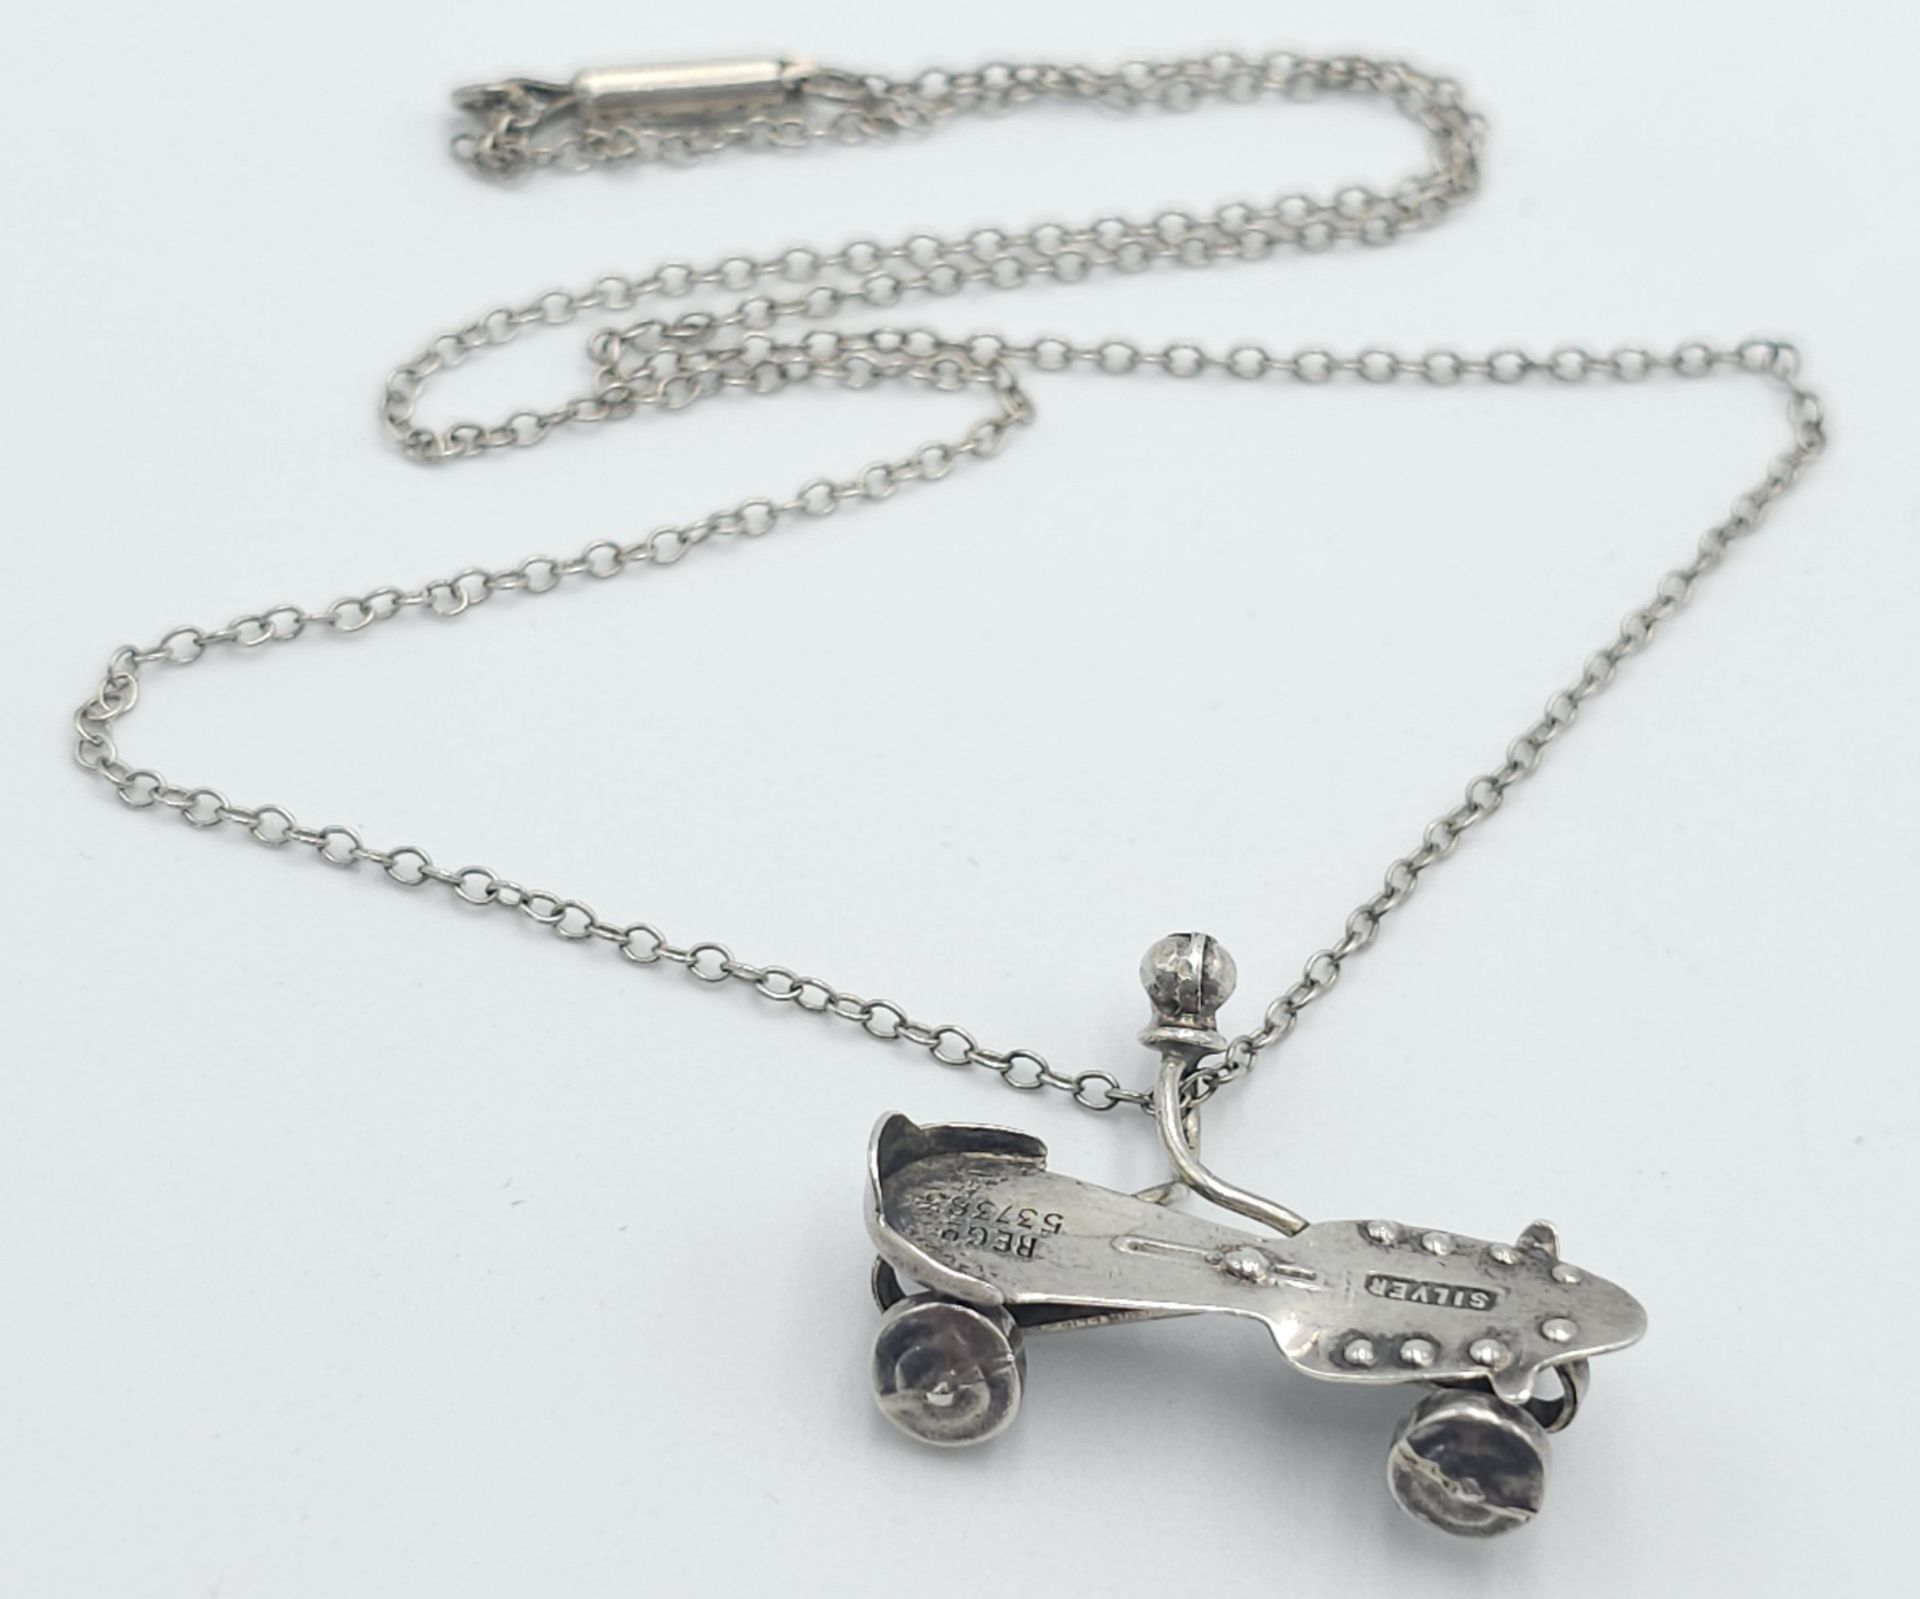 A Vintage Silver Roller Skate Pendant Necklace. 42cm Length. Silver Pendant has a Registered Mark on